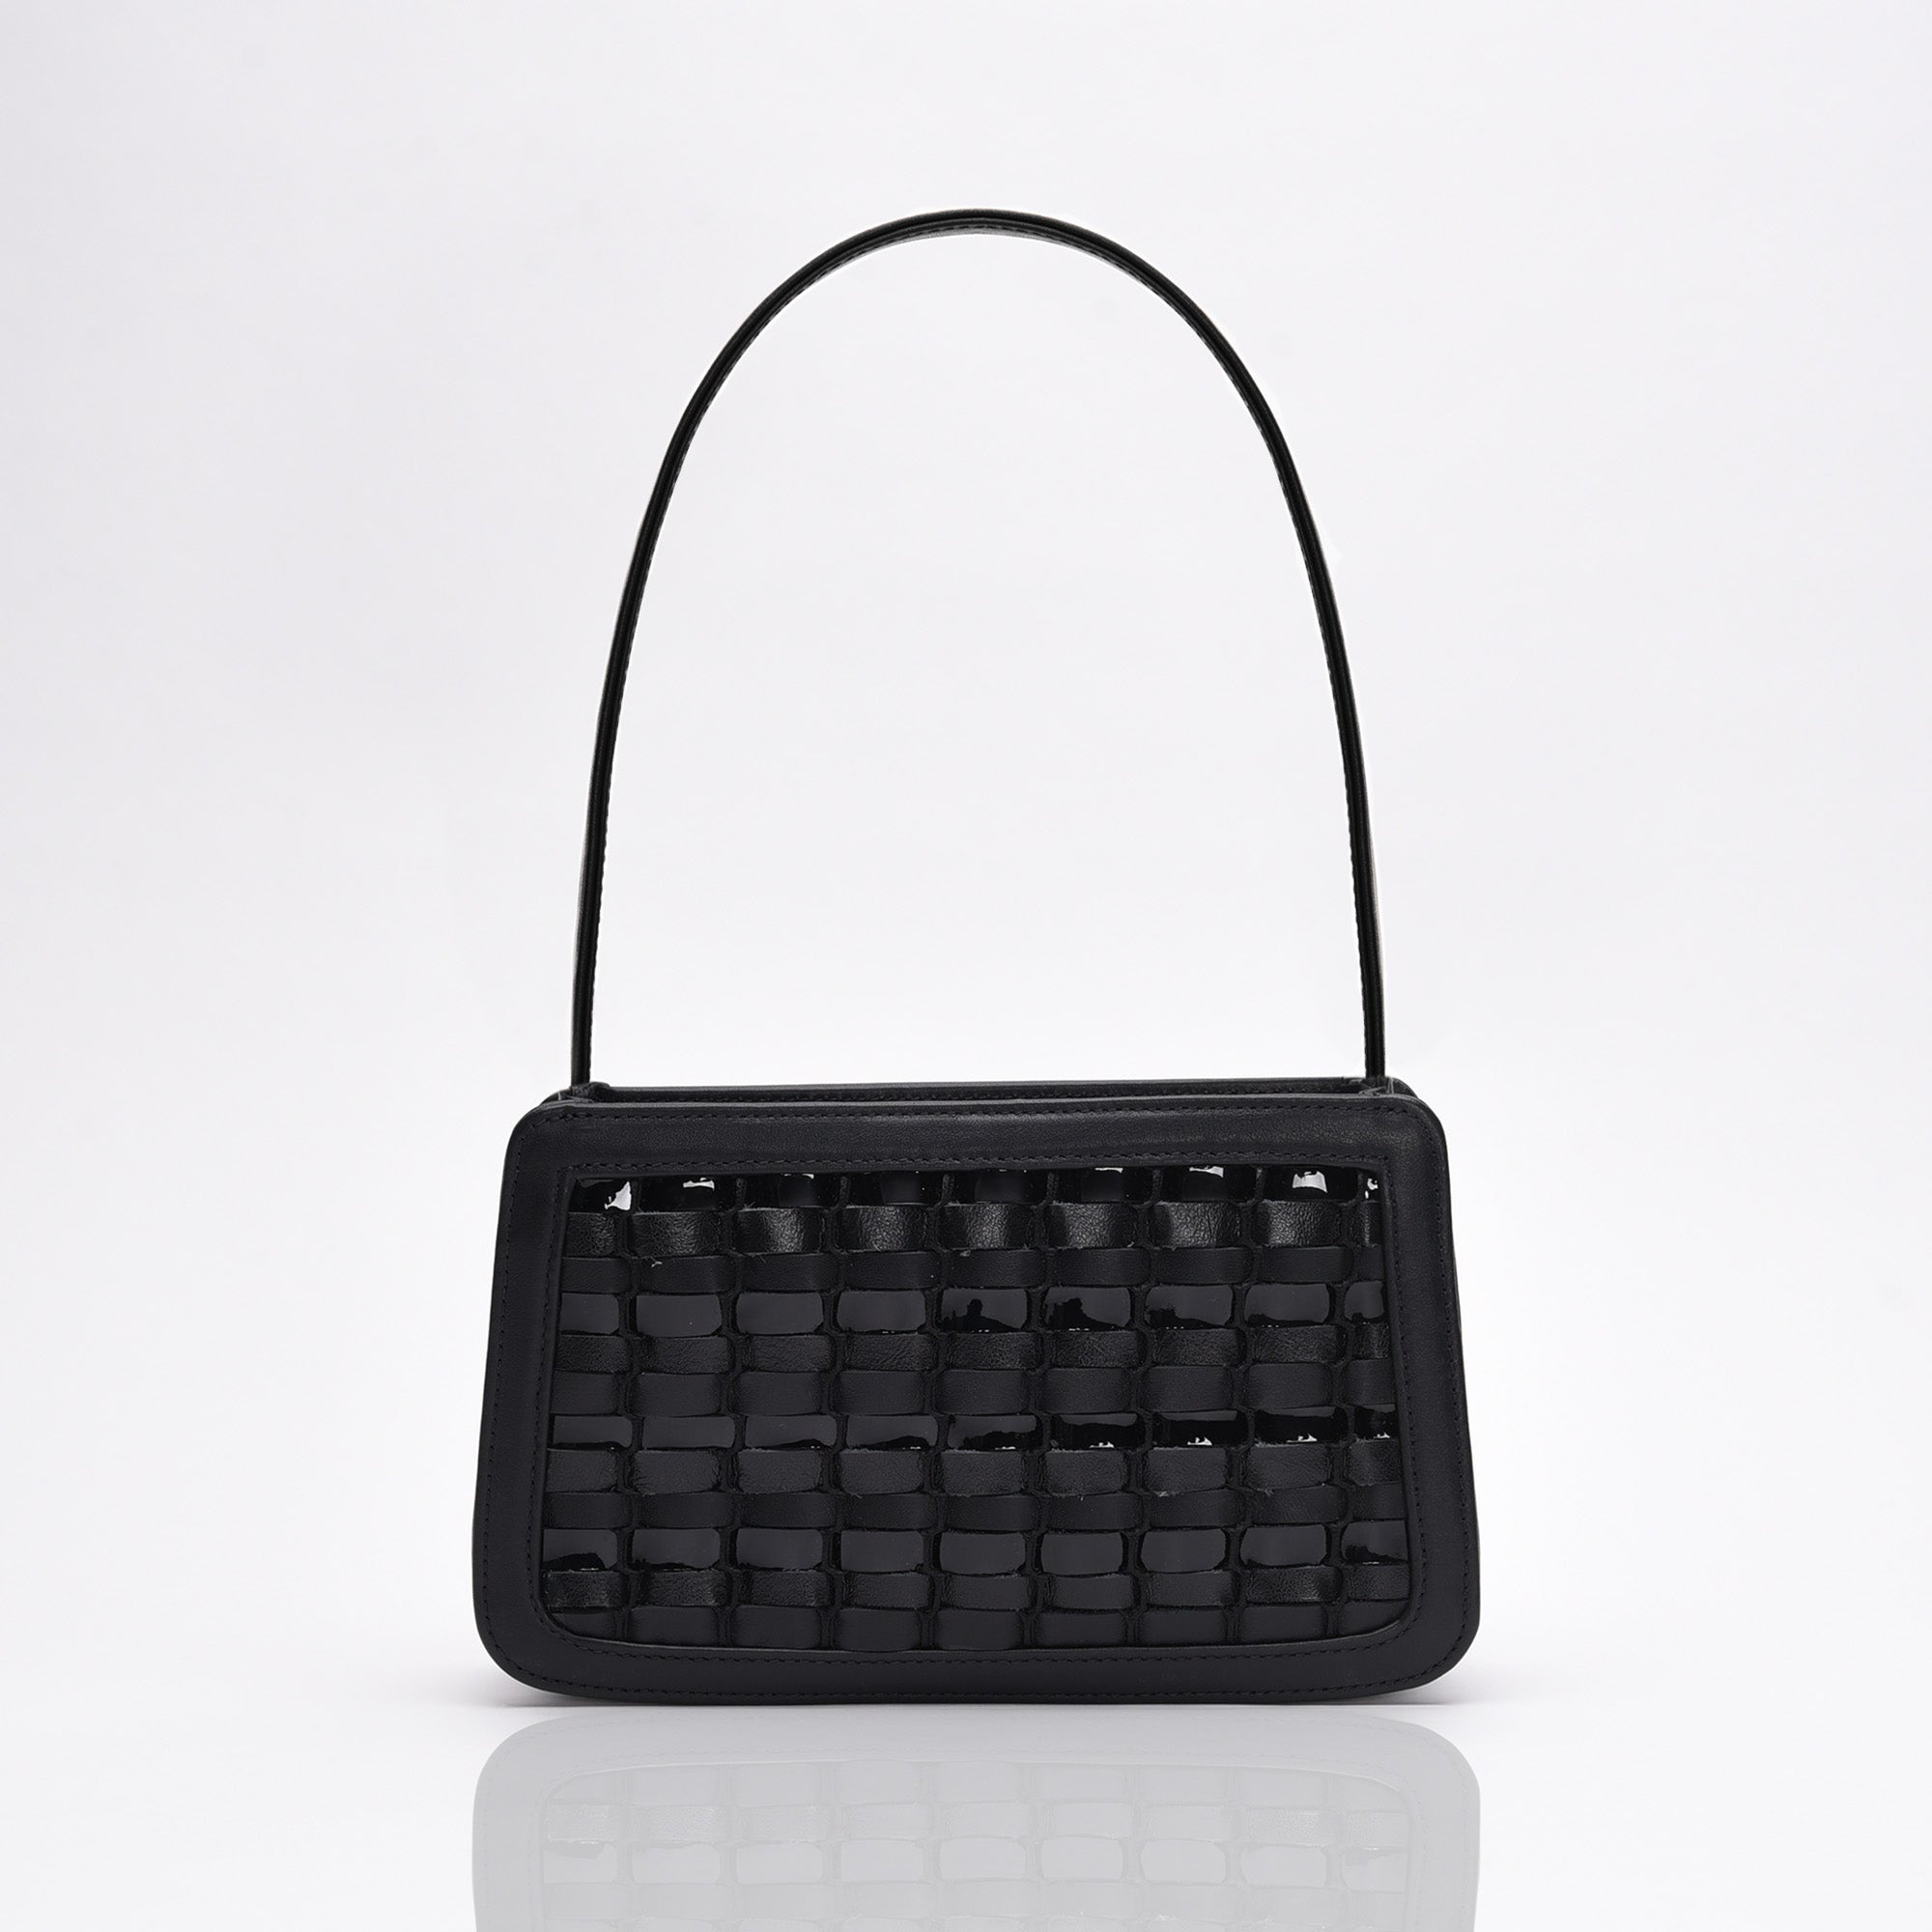 Cara Mia Handbags - Buy Cara Mia Handbags @Min 70% Off Online at Best  Prices In India | Flipkart.com